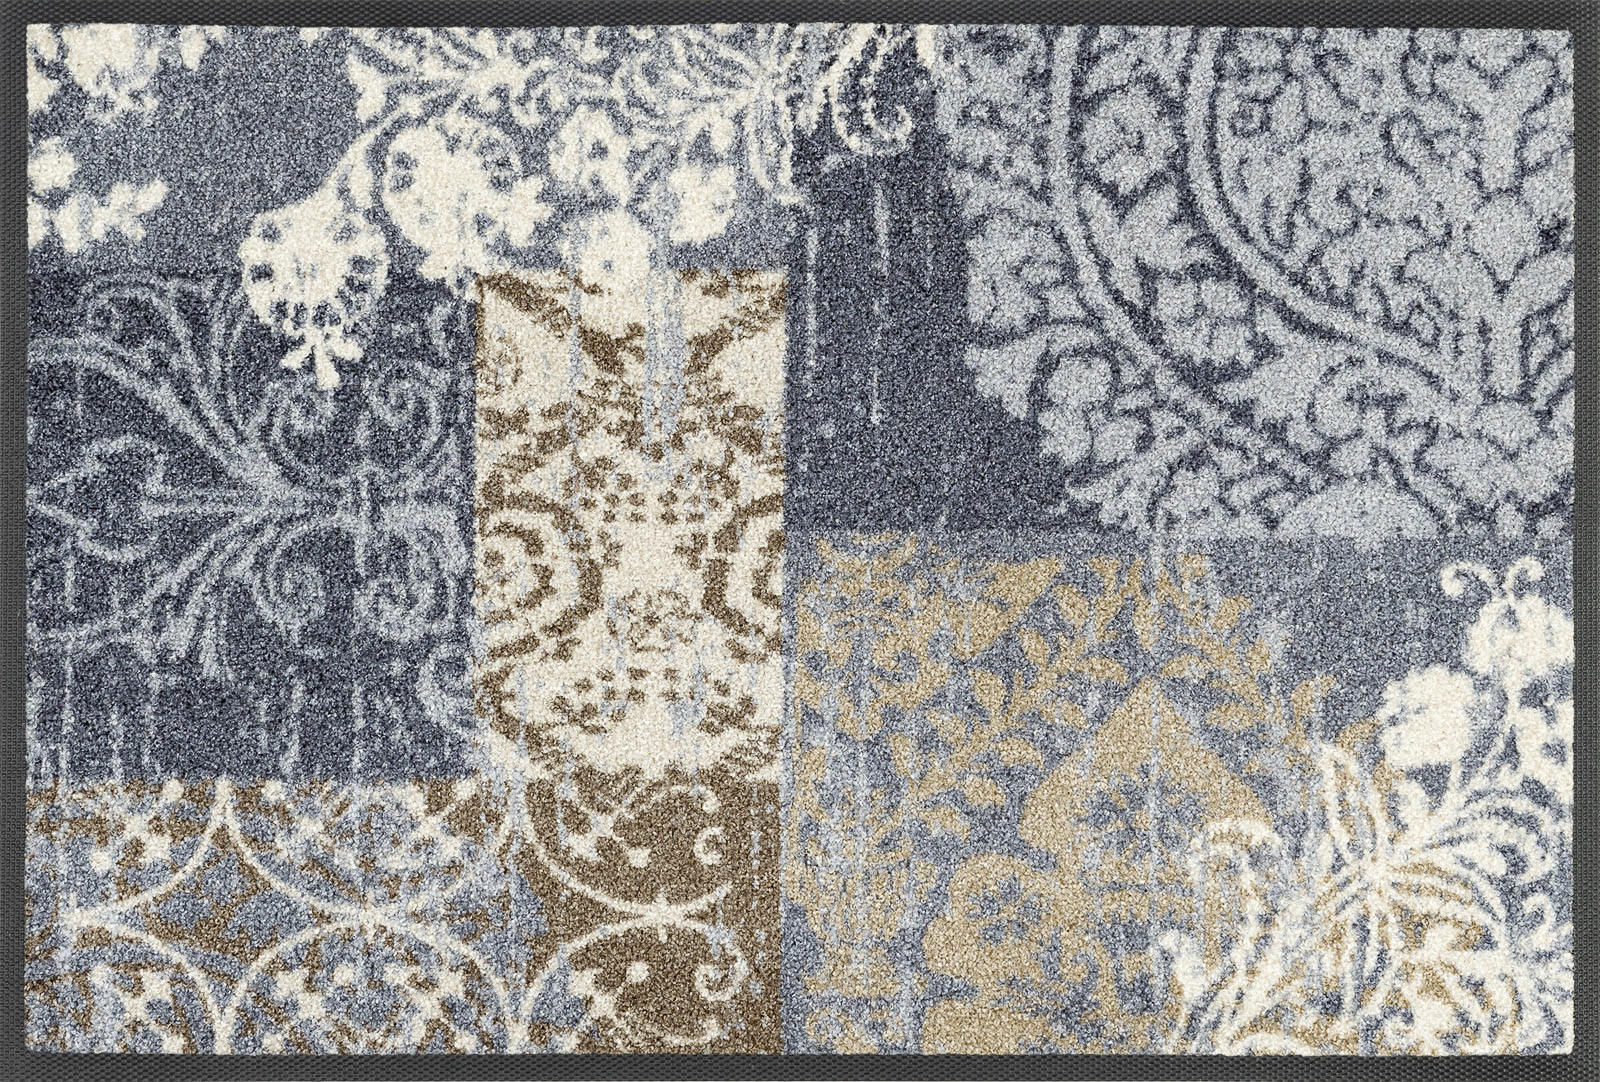 FUßMATTE  40/60 cm  Blau, Grau, Beige  - Blau/Beige, Basics, Kunststoff/Textil (40/60cm) - Esposa